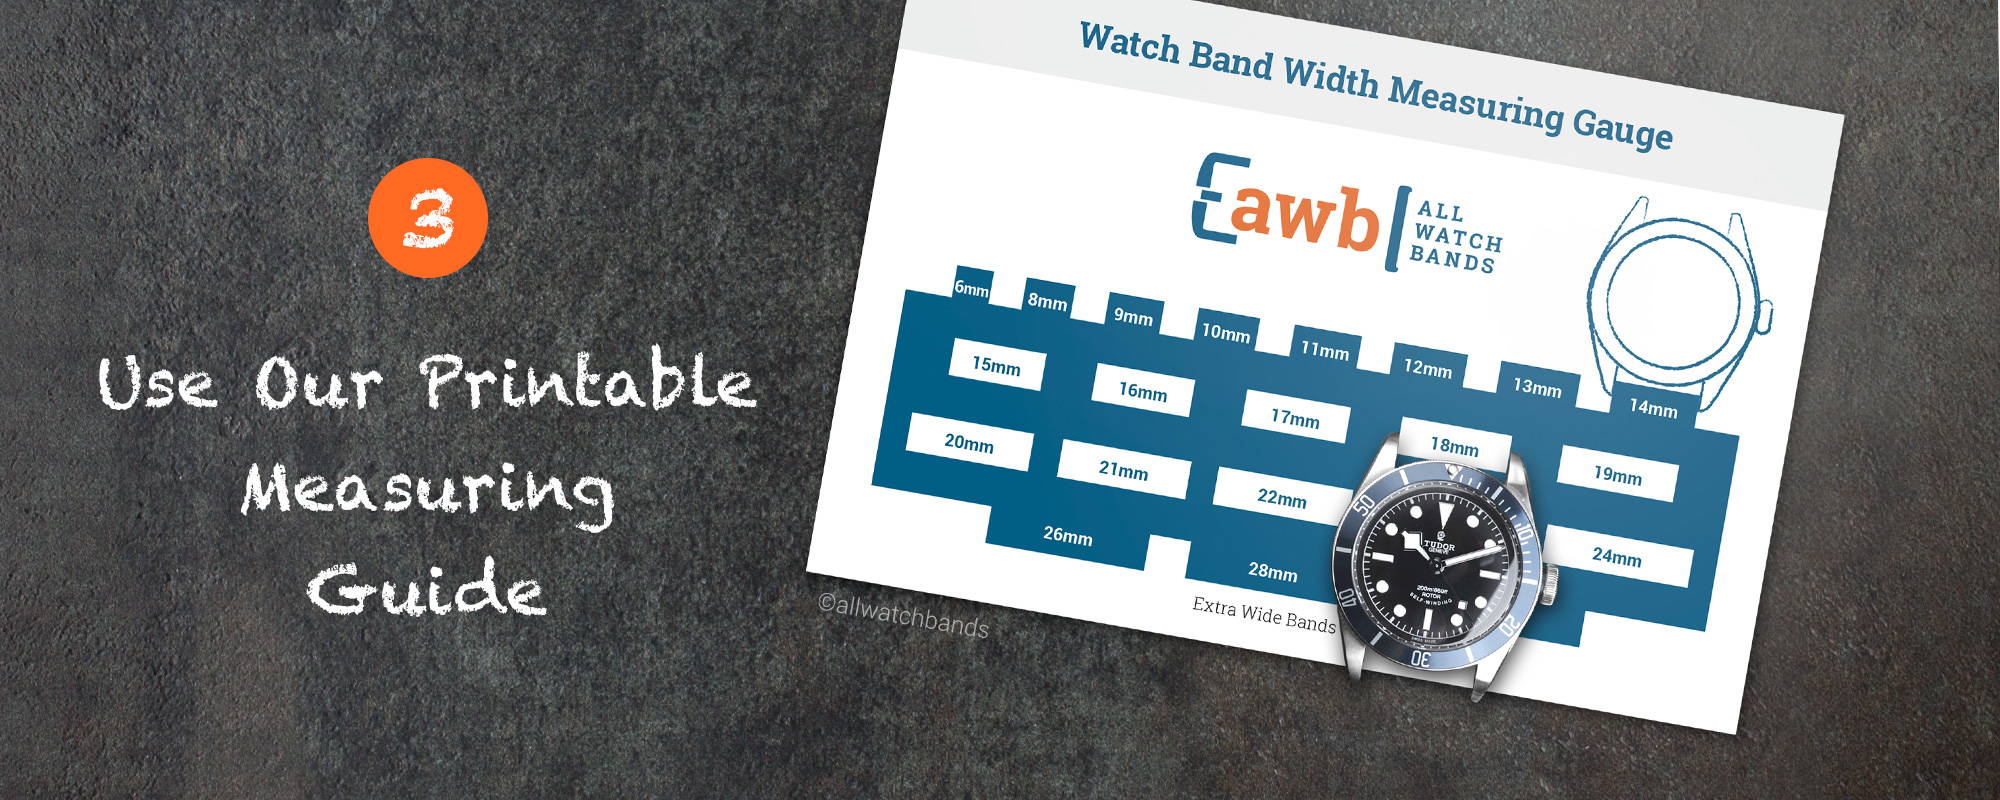 watch-band-measuring-guide-allwatchbands